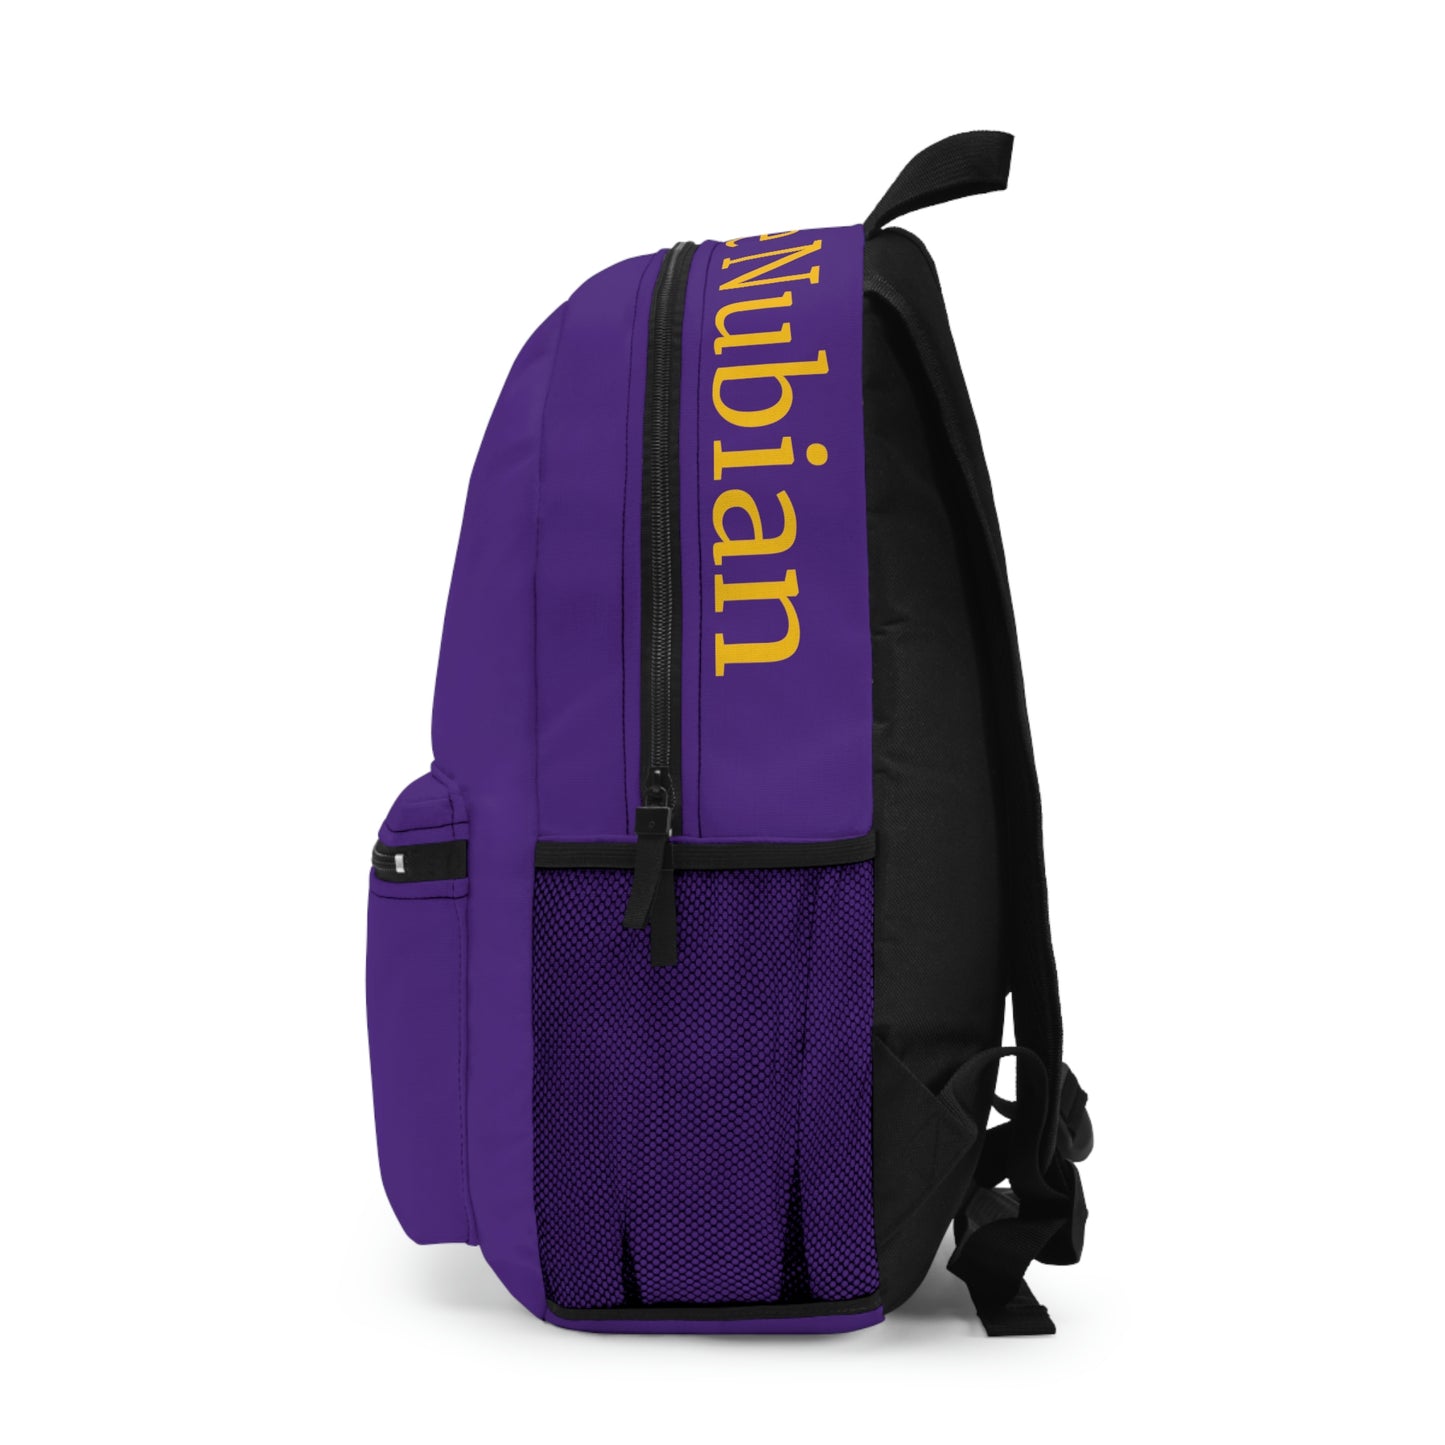 Shades of the Nubian Sun Logo Backpack, Deep Purple